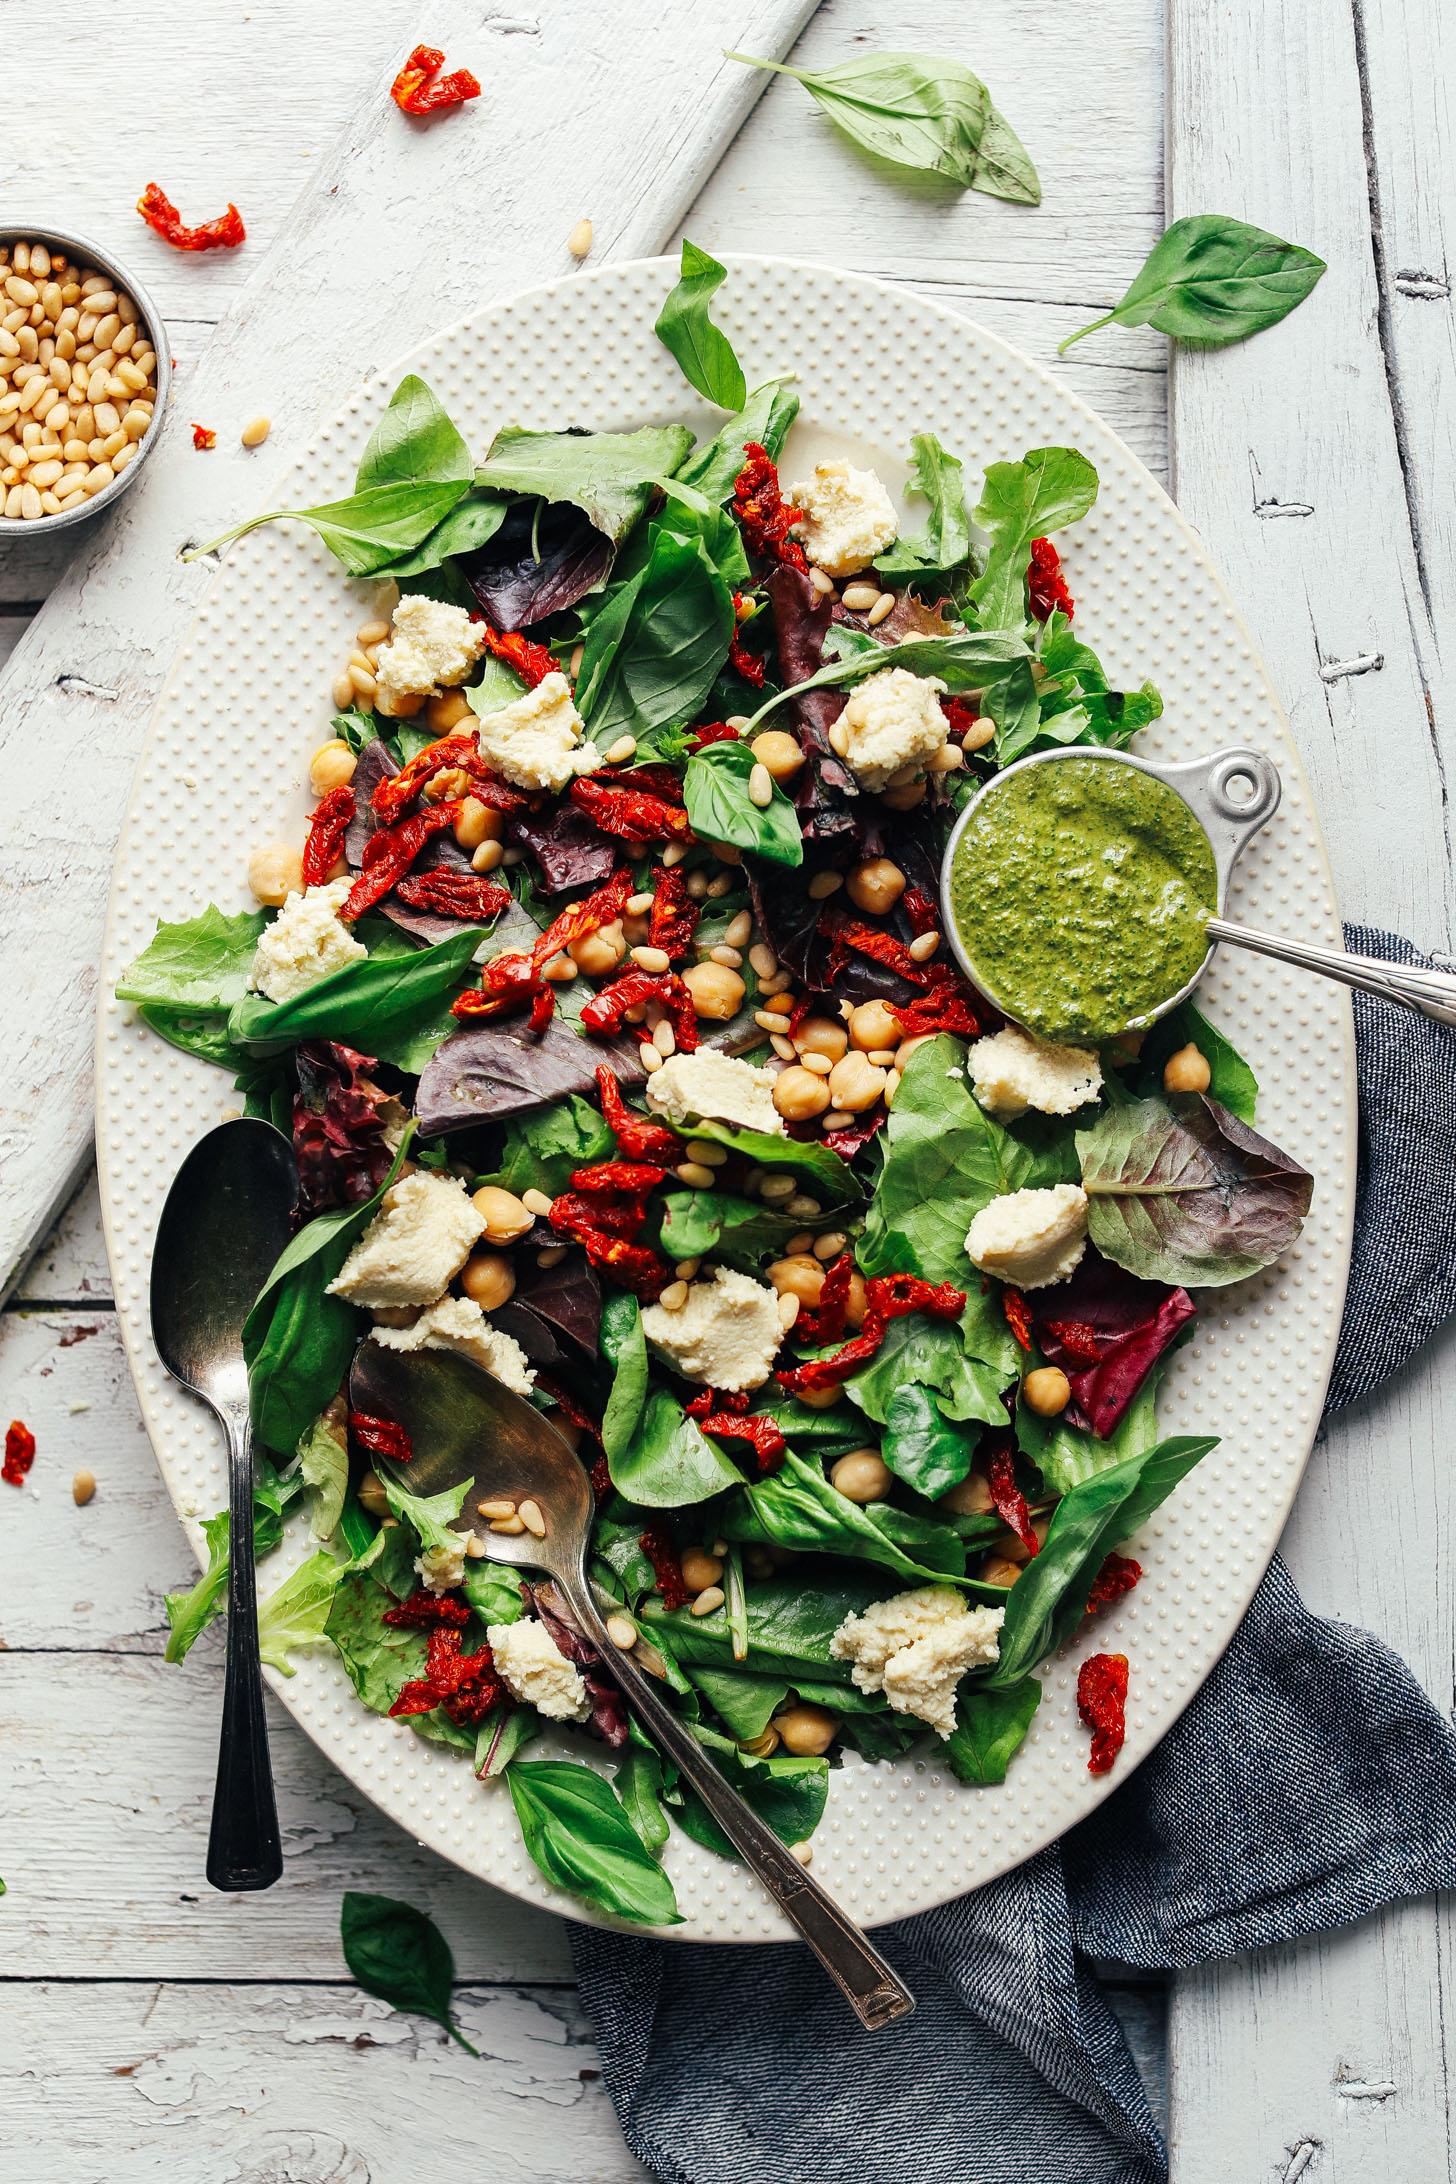 DELICIOUS Green Salad with Almond Ricotta, Vibrant Pesto, and Sundried Tomatoes! 30 minutes, simple ingredients, SO healthy! #vegan #plantbased #pesto #salad #recipe #glutenfree #minimalistbaker